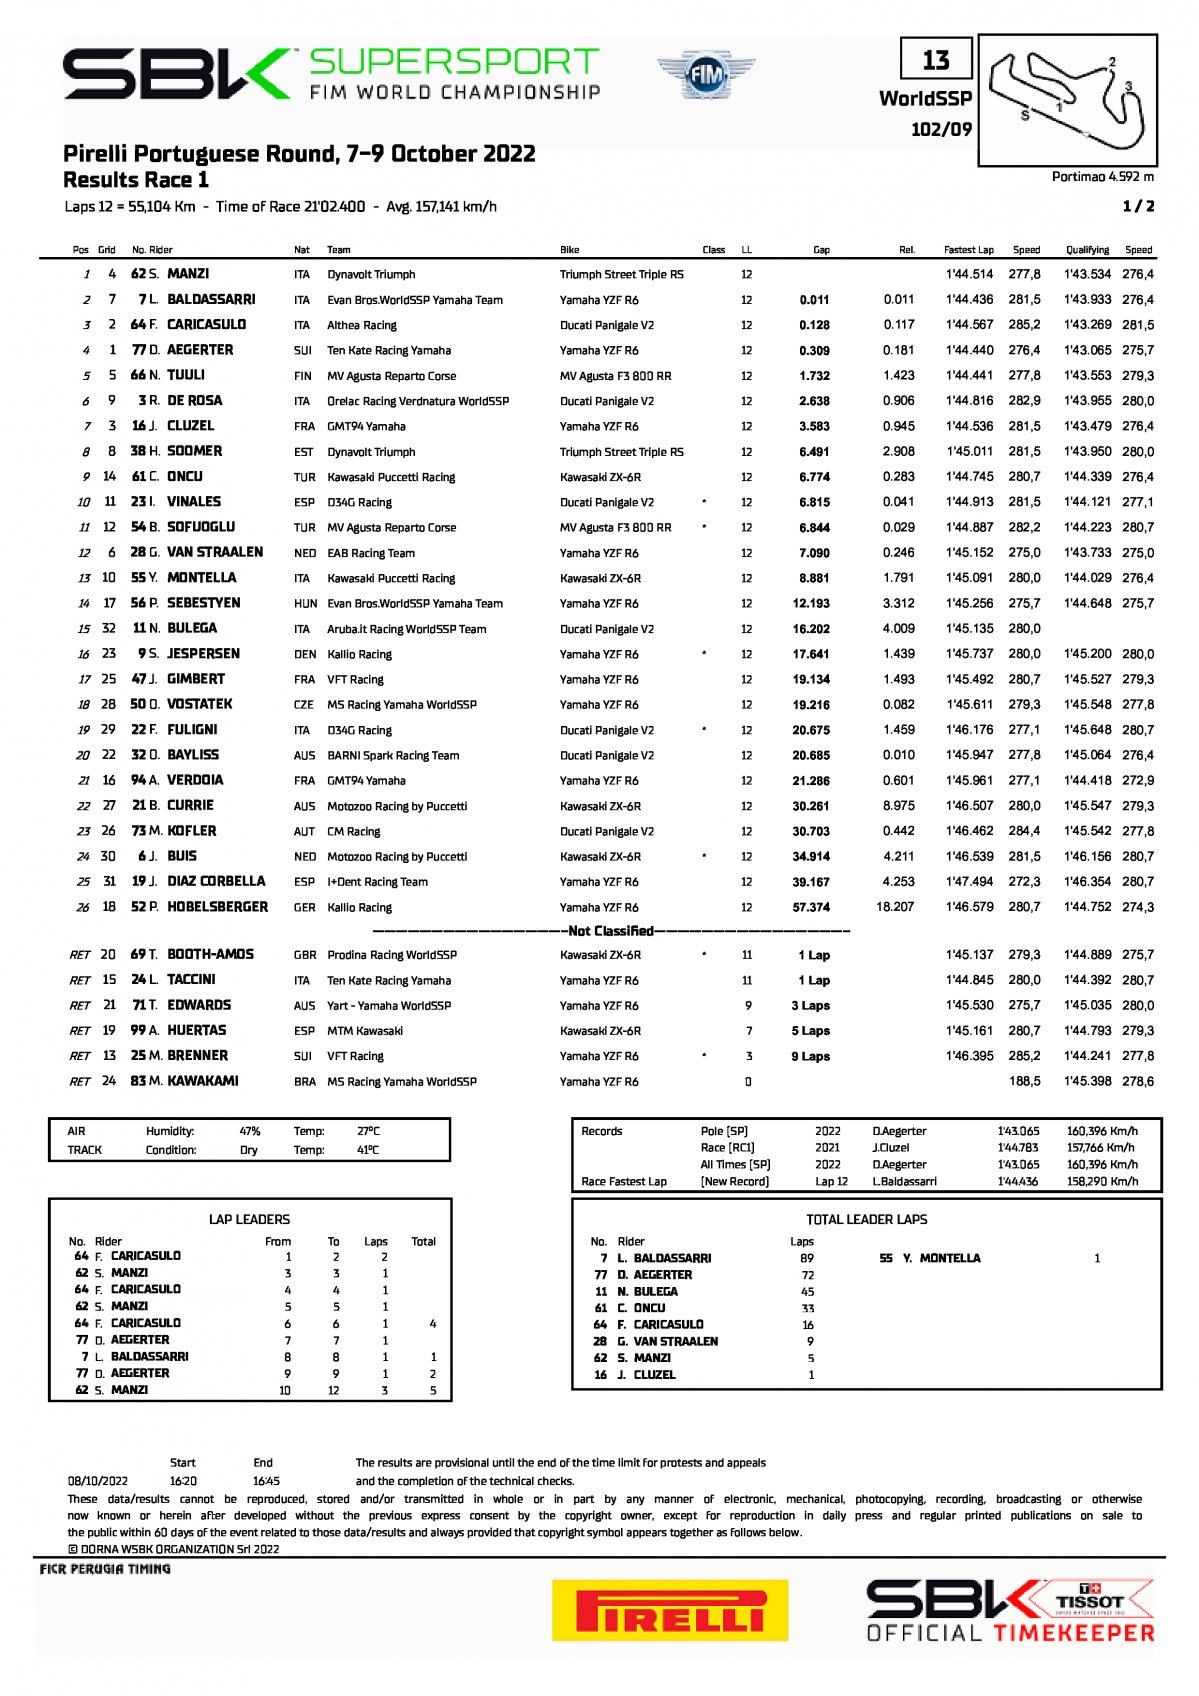 Результаты 1 гонки PRTWorldSBK, World Supersport, Портимао 8/10/2022